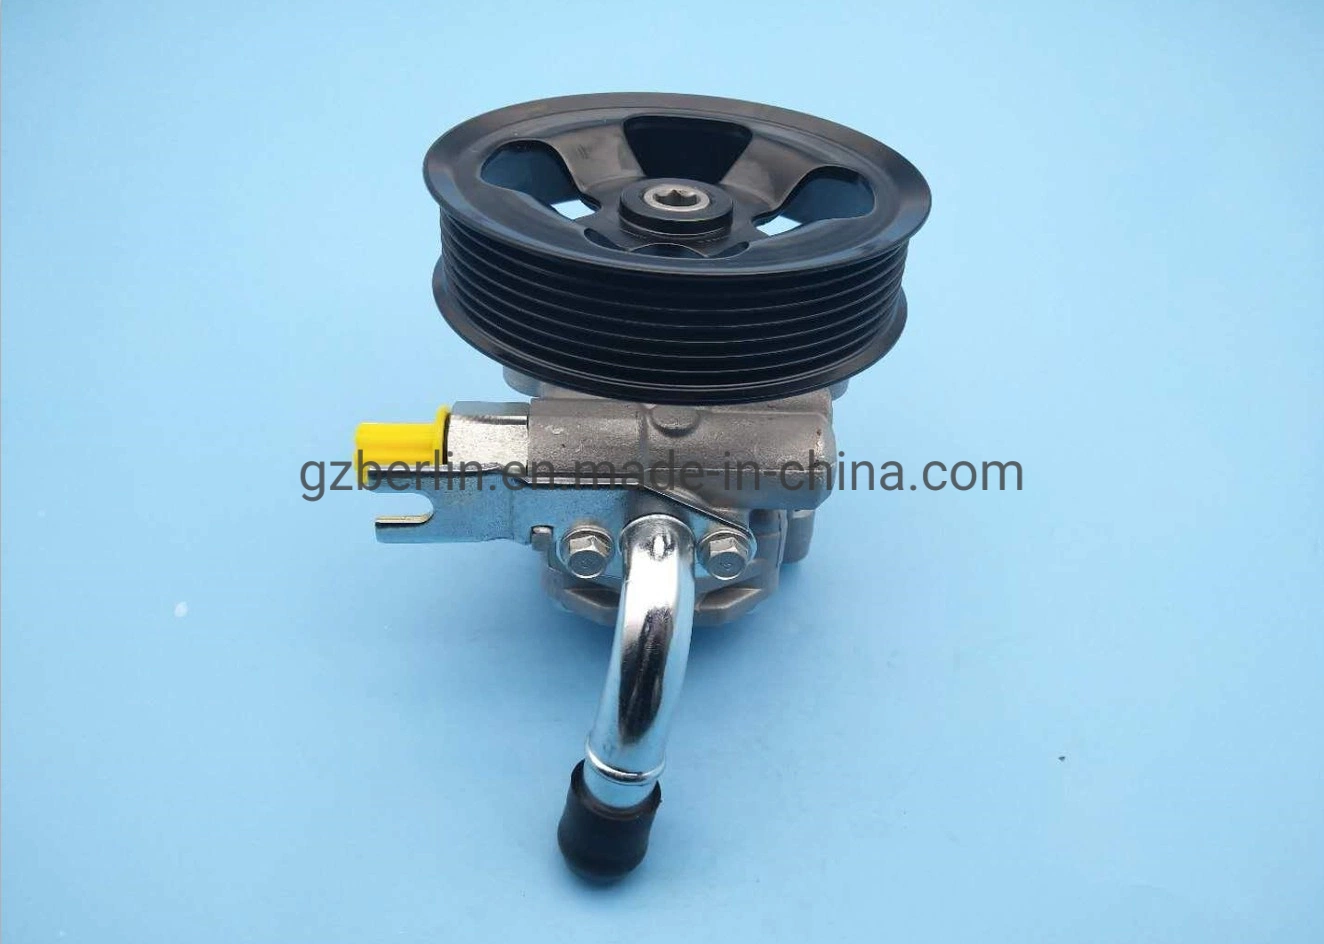 Power Steering Pump for Hyundai H-1 Starex 2.5 D4CB 2007-2012 57100-4h000 571004h000